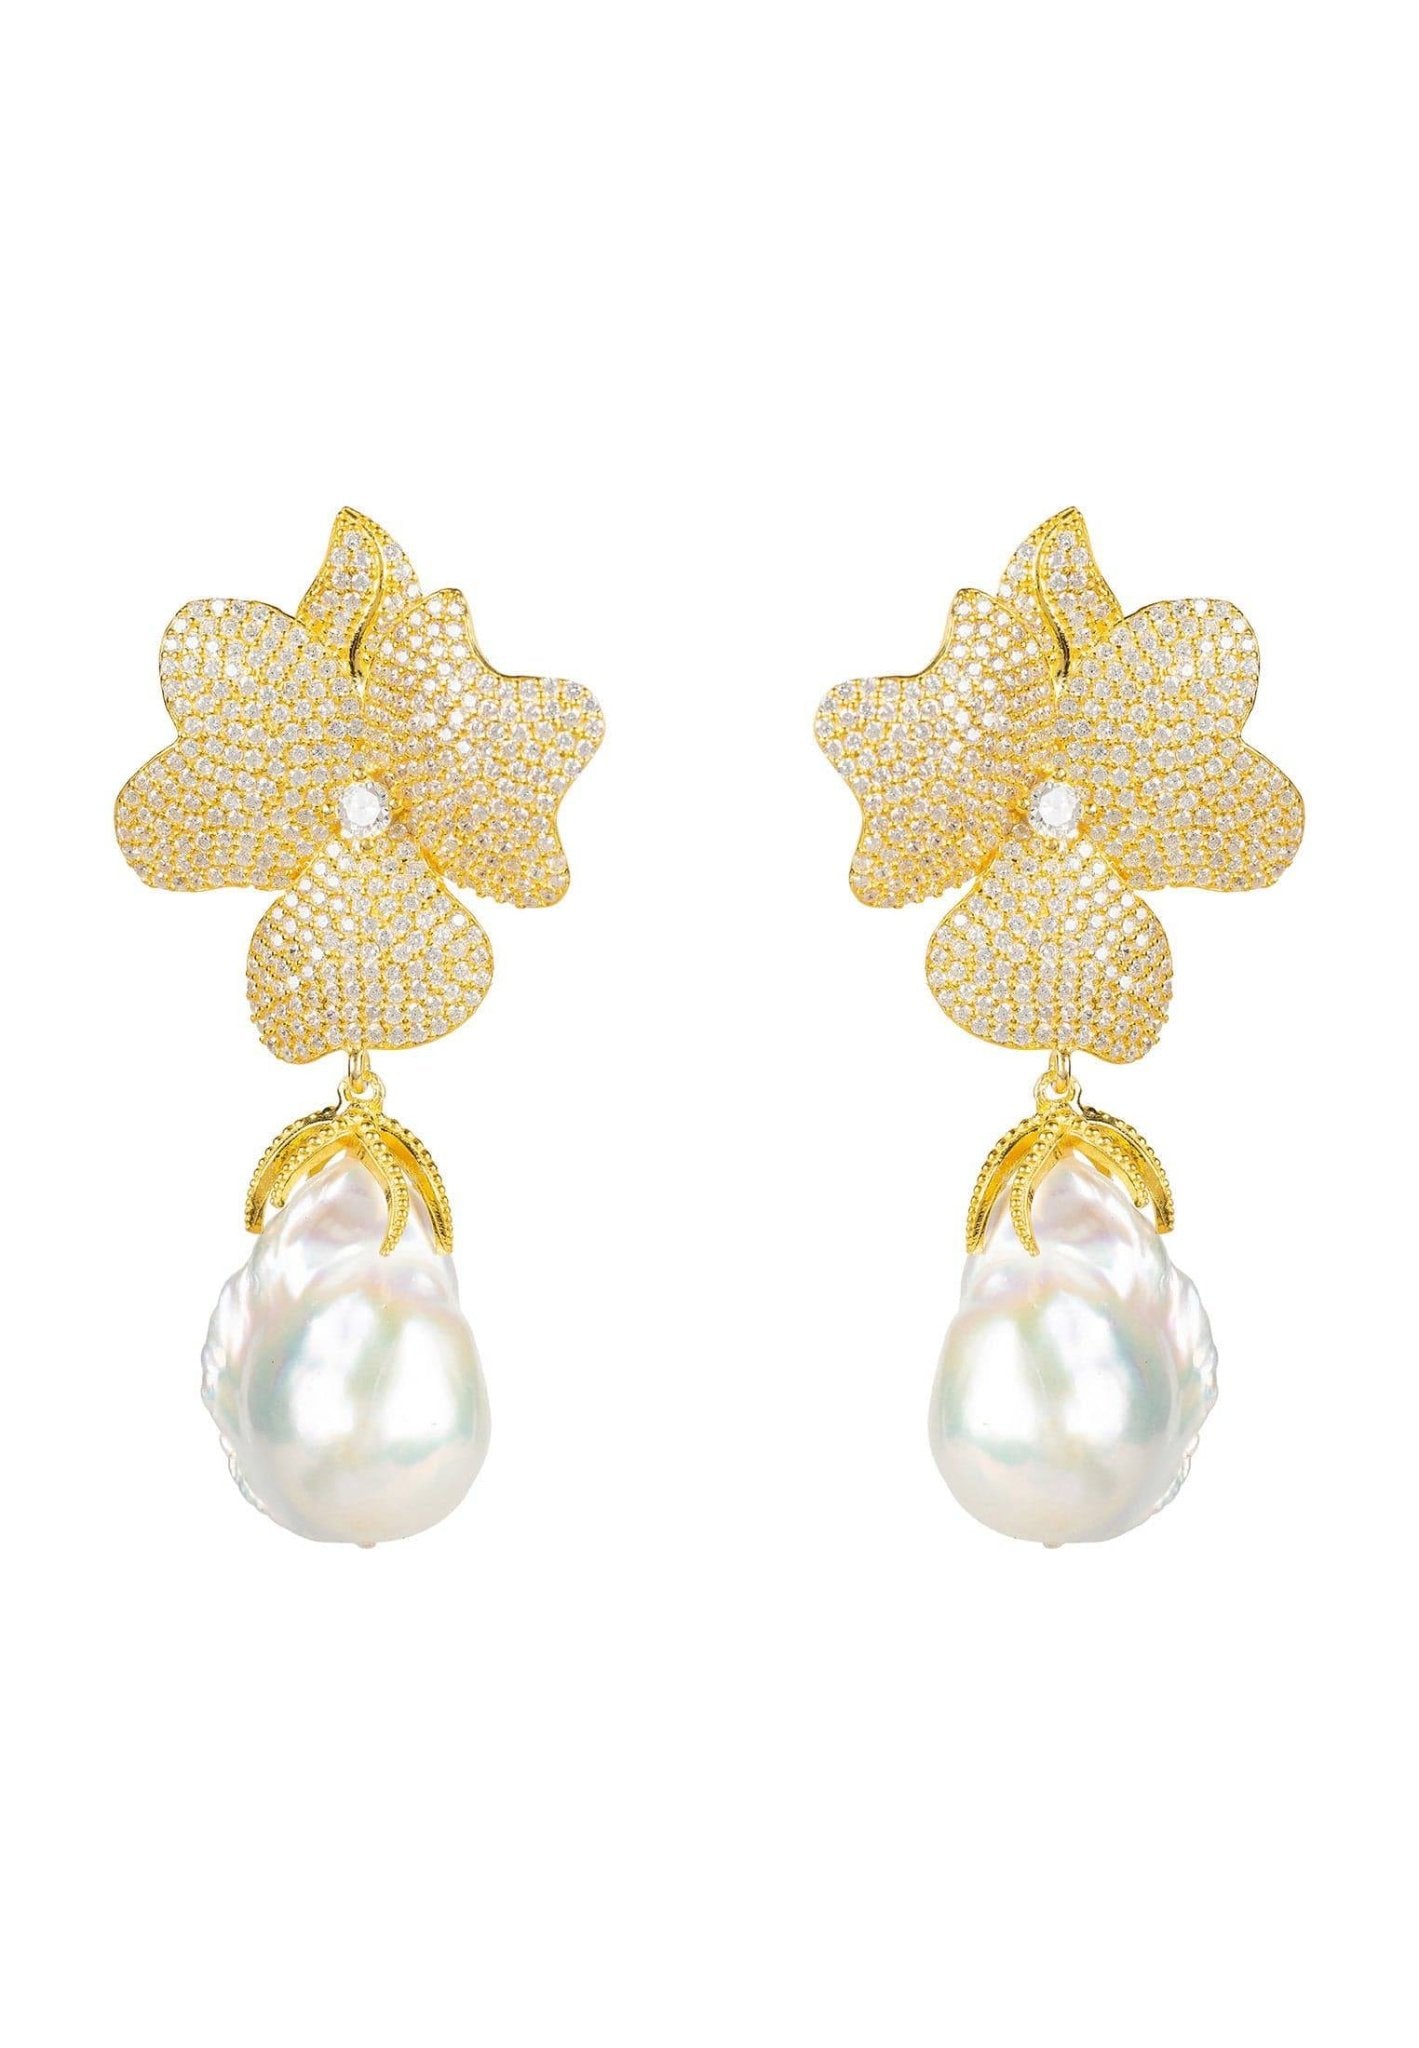 Baroque Pearl White Flower Earrings Yellow Gold - LATELITA Earrings